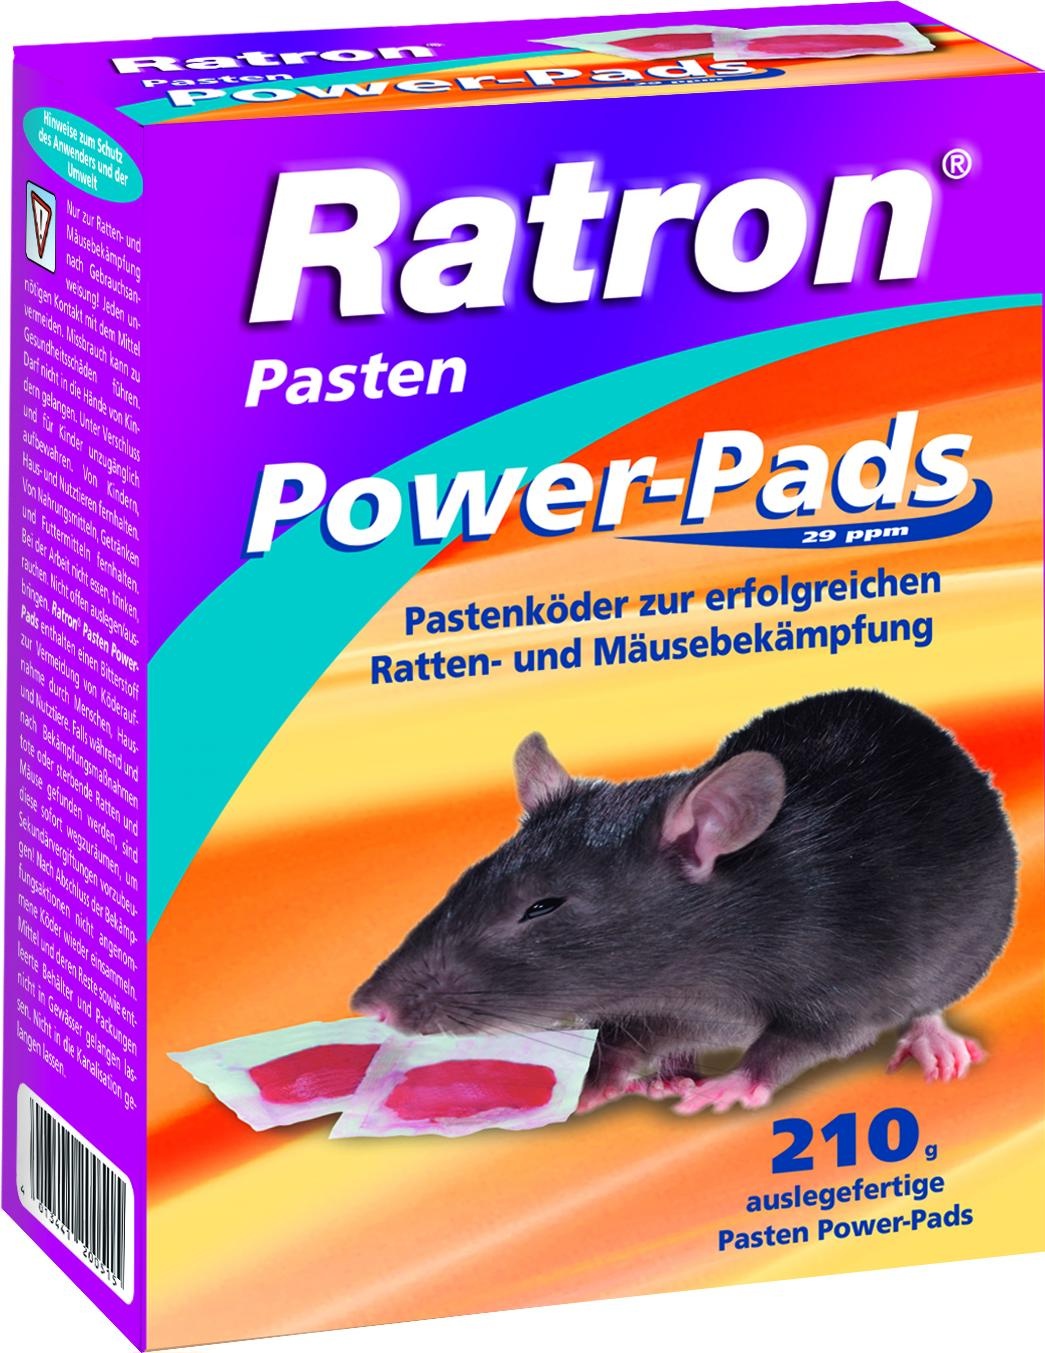 ratron pasten power-pads